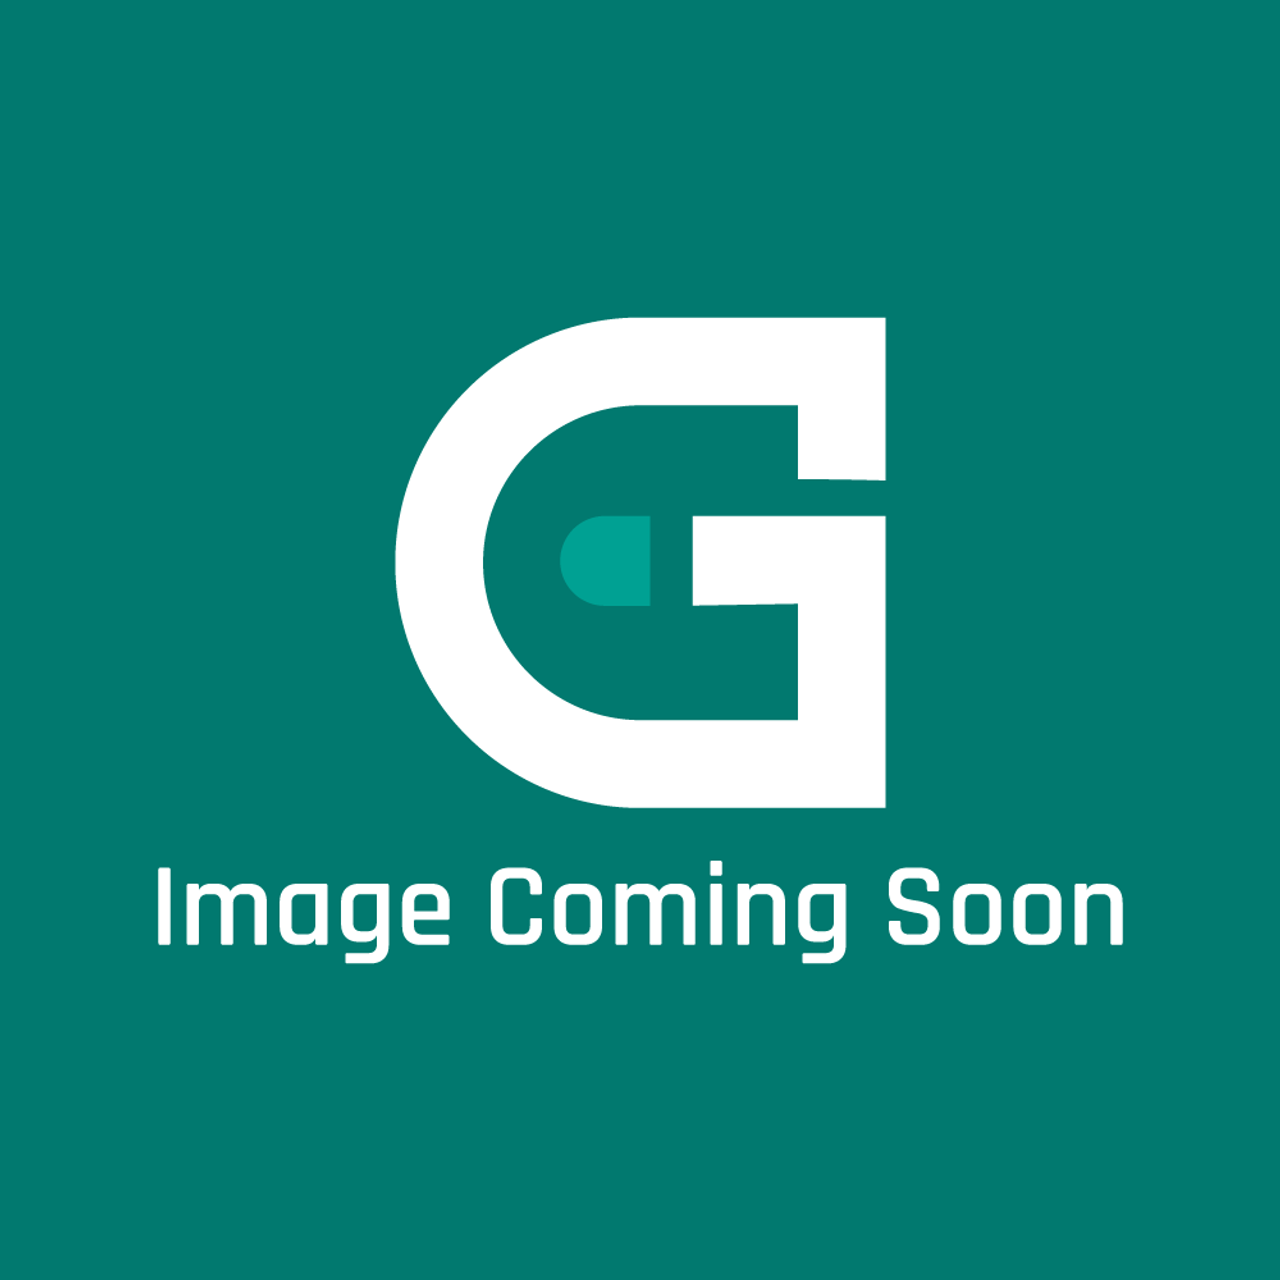 GE Appliances WE01X20424 - Strain Relief Bracket Ga - Image Coming Soon!